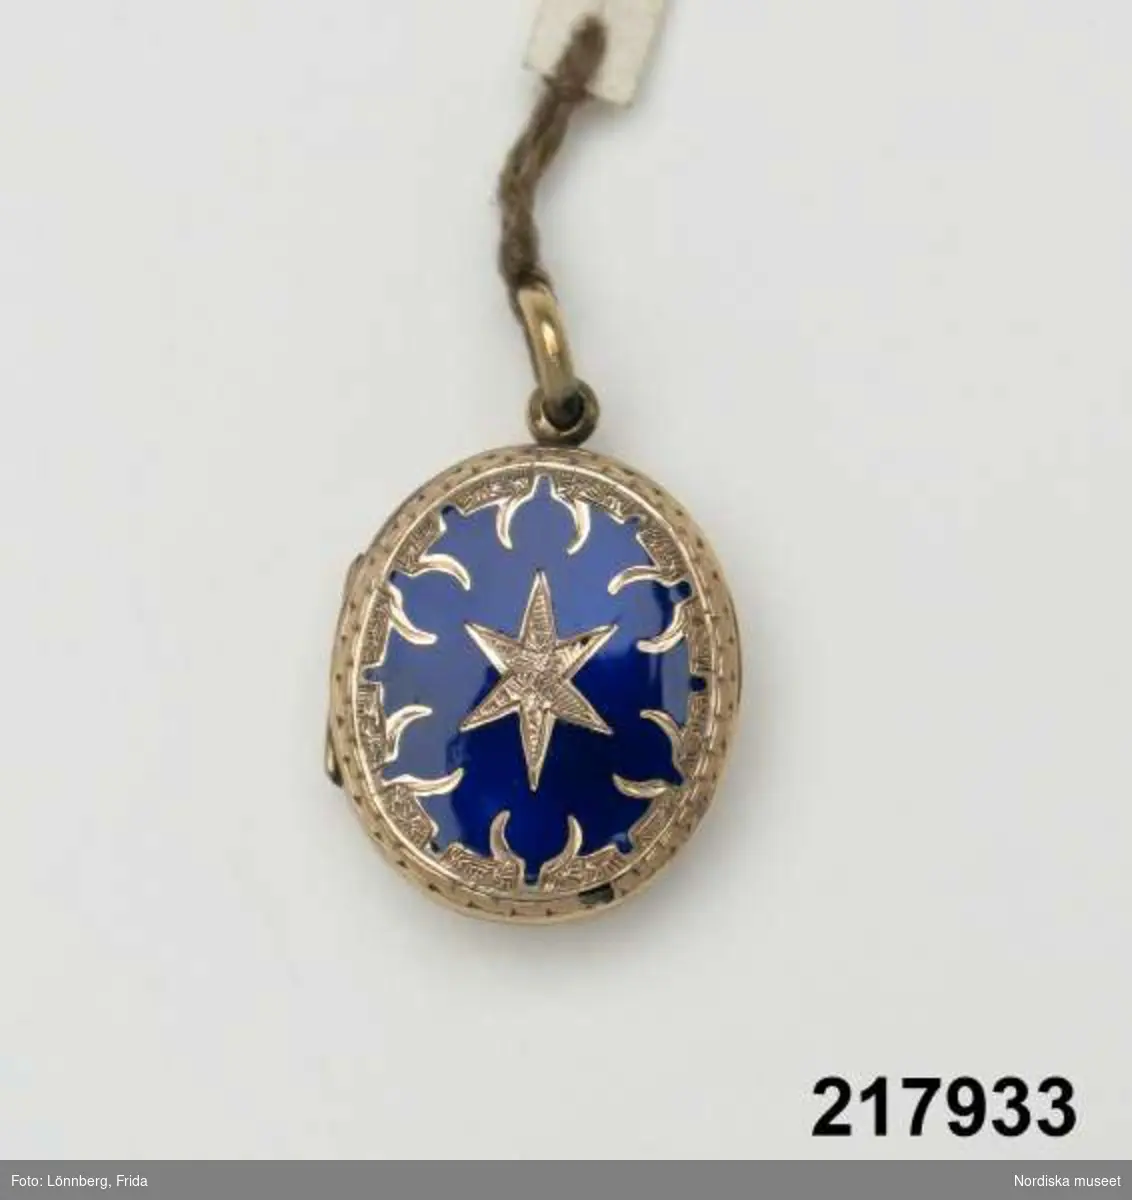 Katalogkort:
"Medaljong, guld med blå emalj,
H. 2,7 cm

Innehåller hårlock."